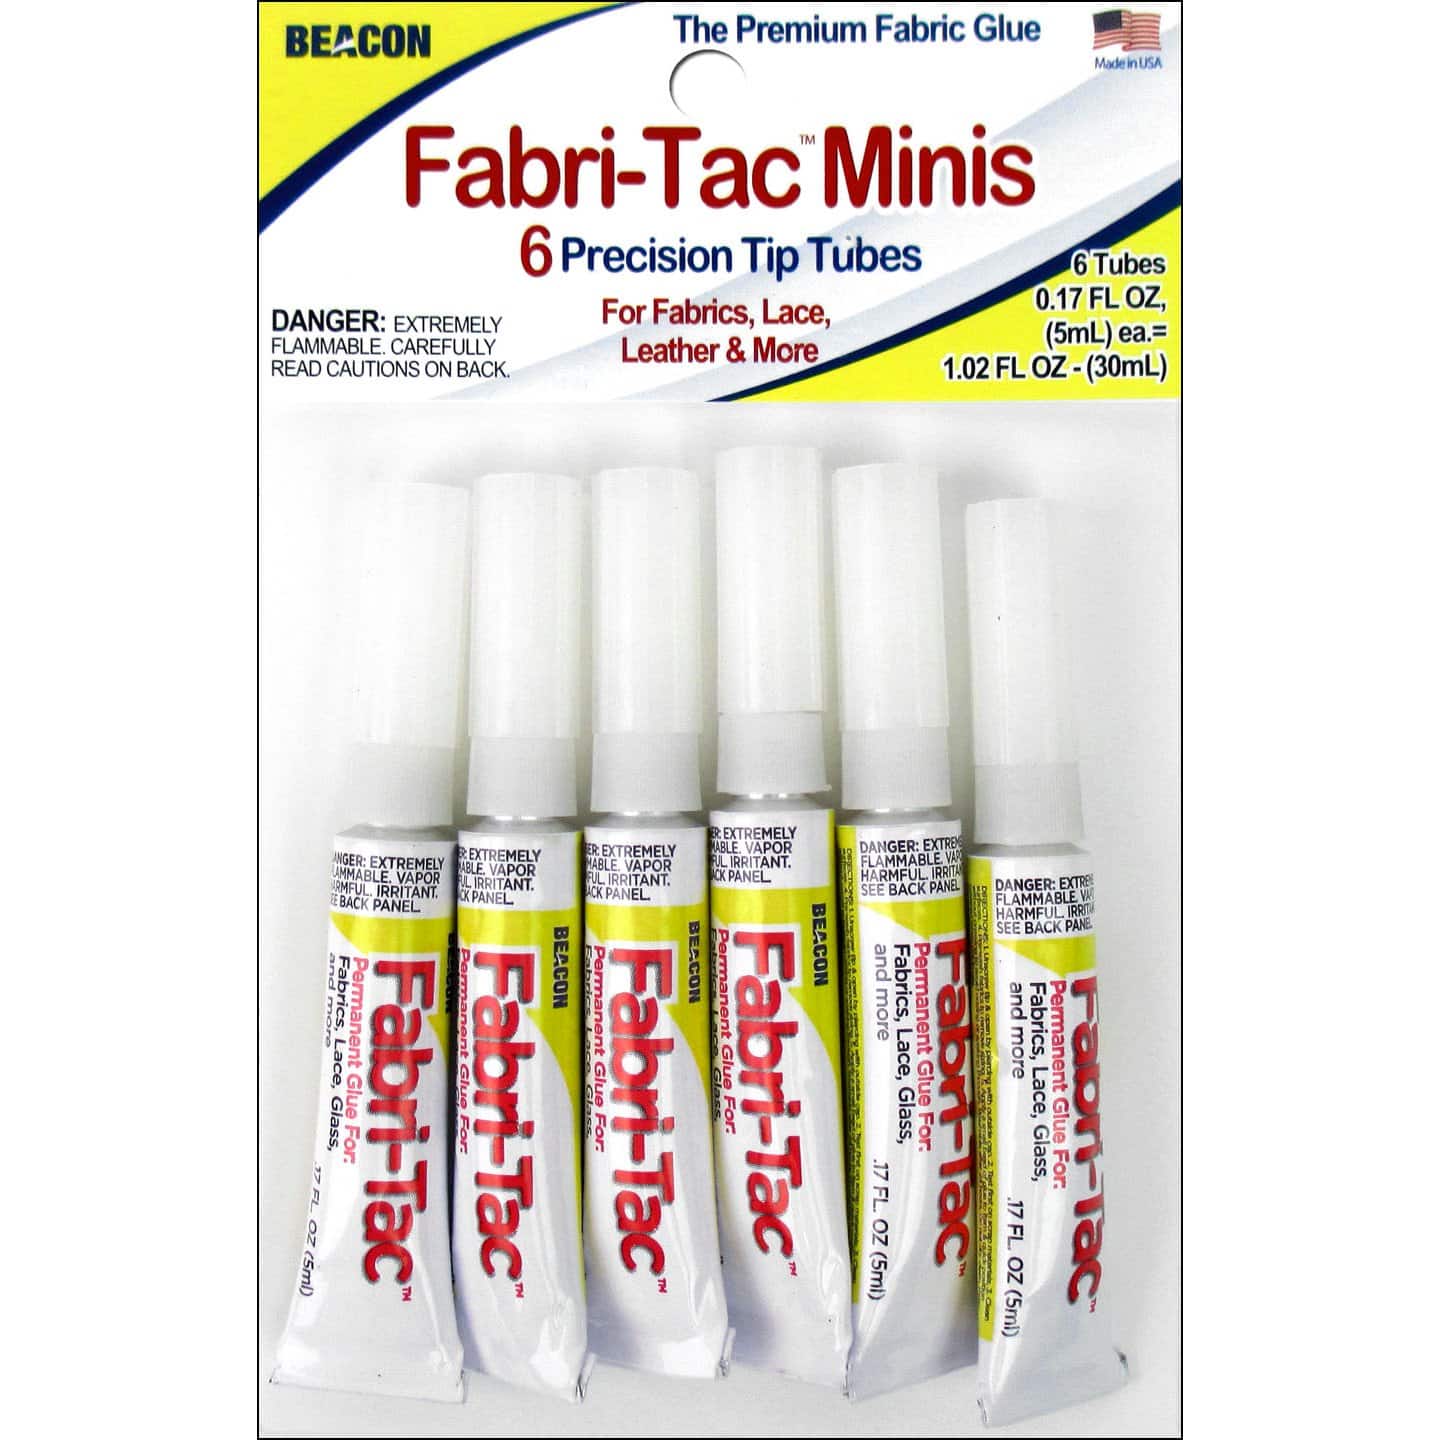 Fabri-Tac® Spray